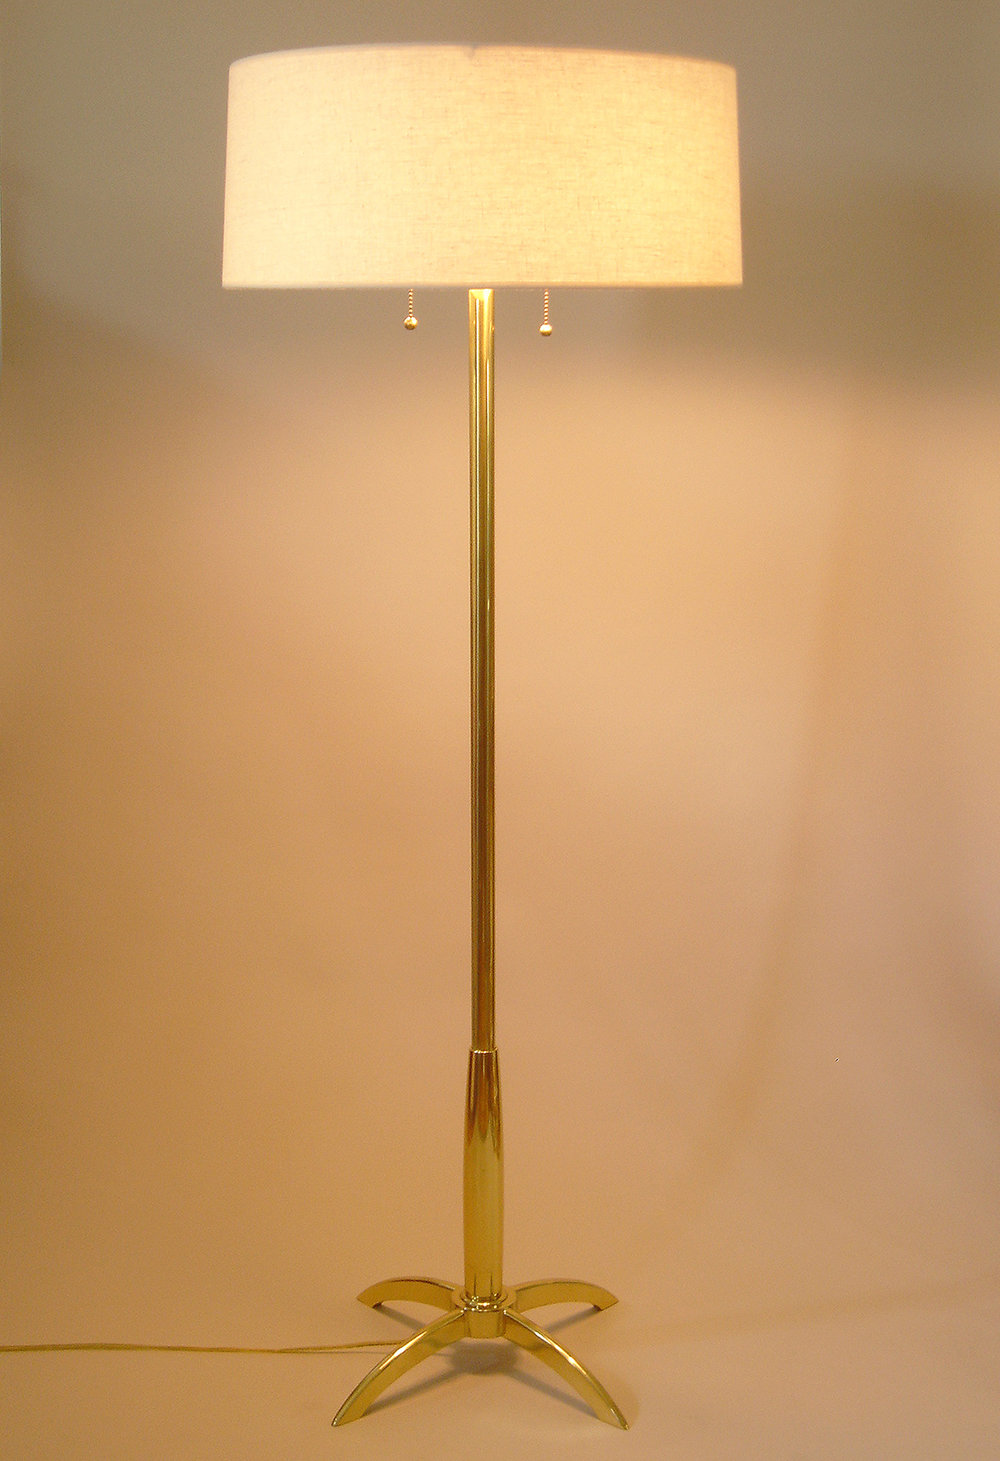 Stiffel Atomic Rocket Floor Lamp, Stiffel Floor Lamps With Table